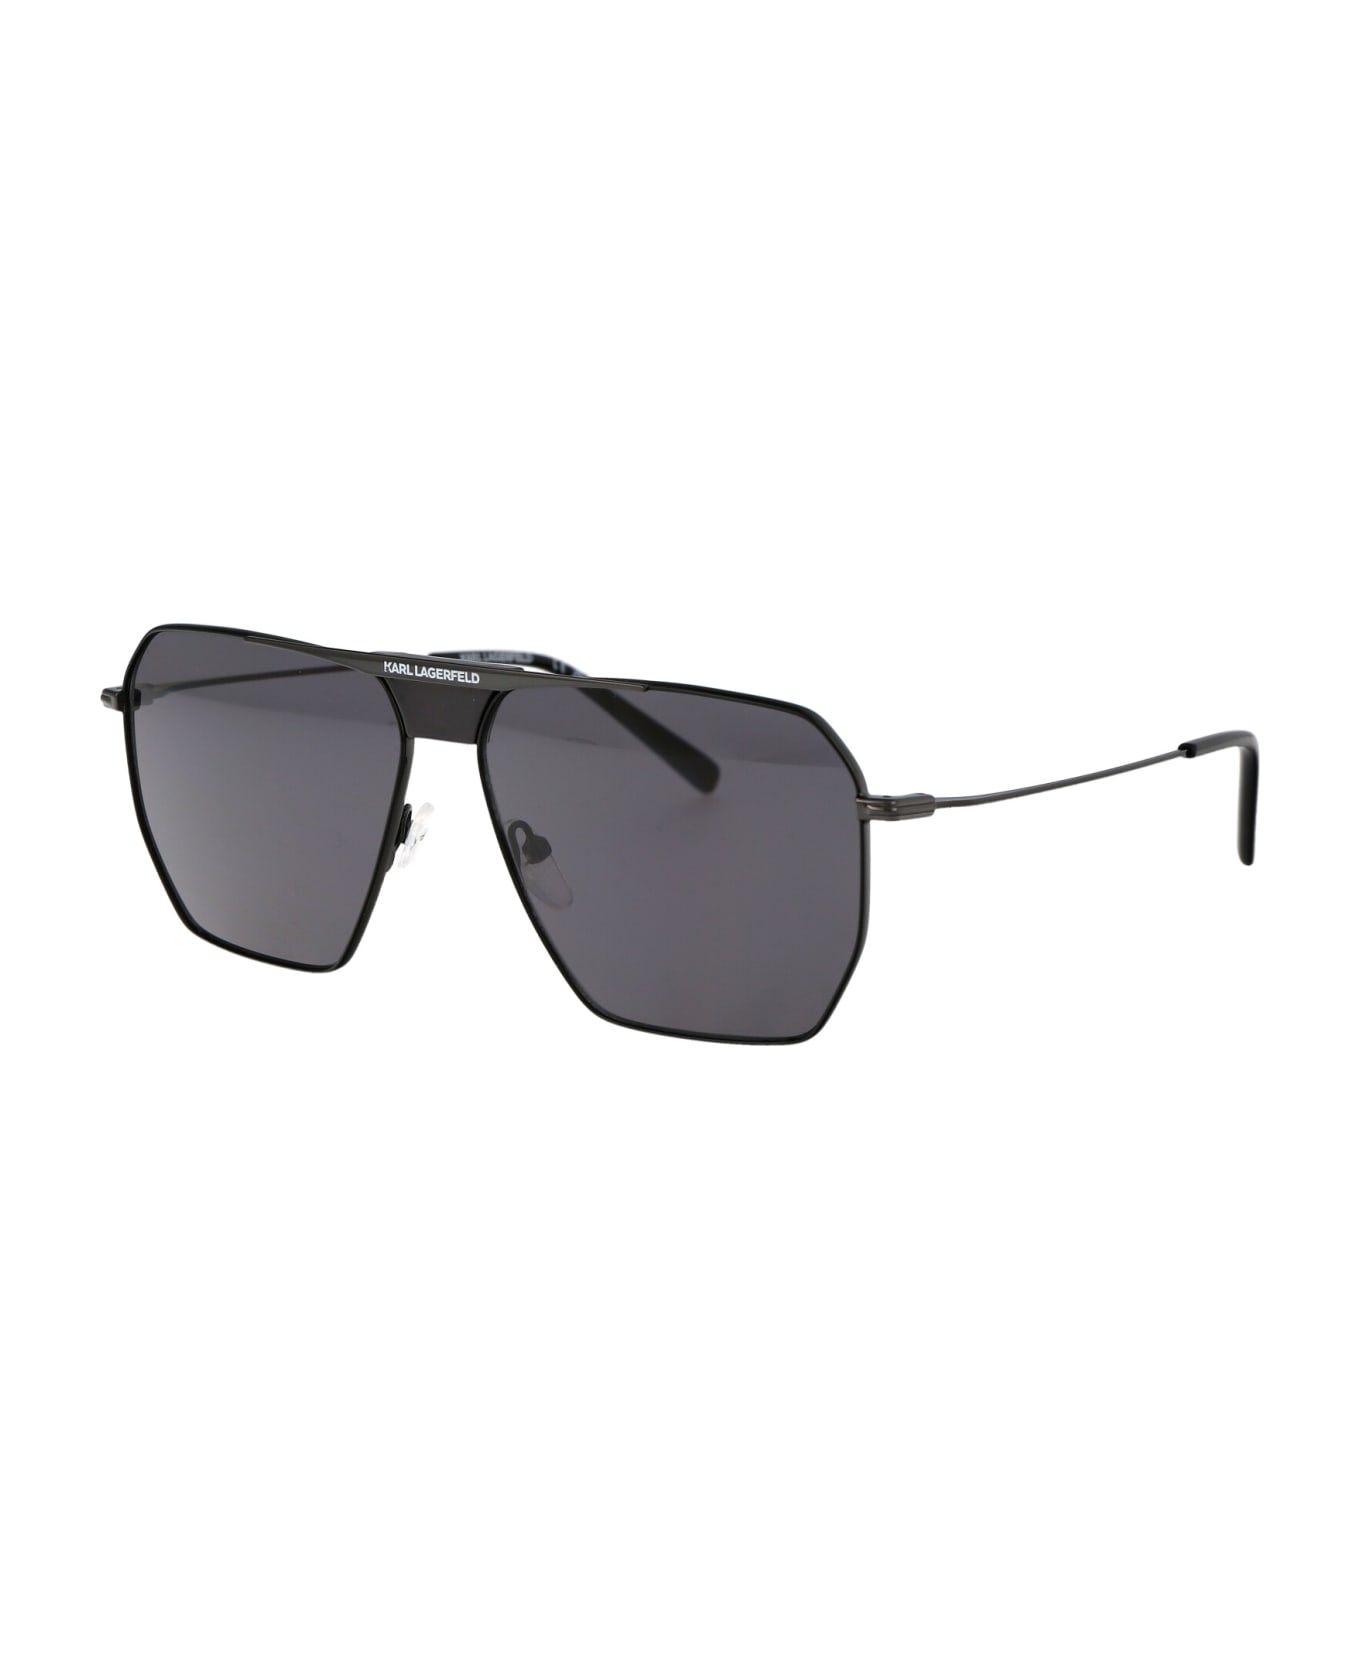 Karl Lagerfeld Kl350s Sunglasses - 001 SHINY BLACK サングラス